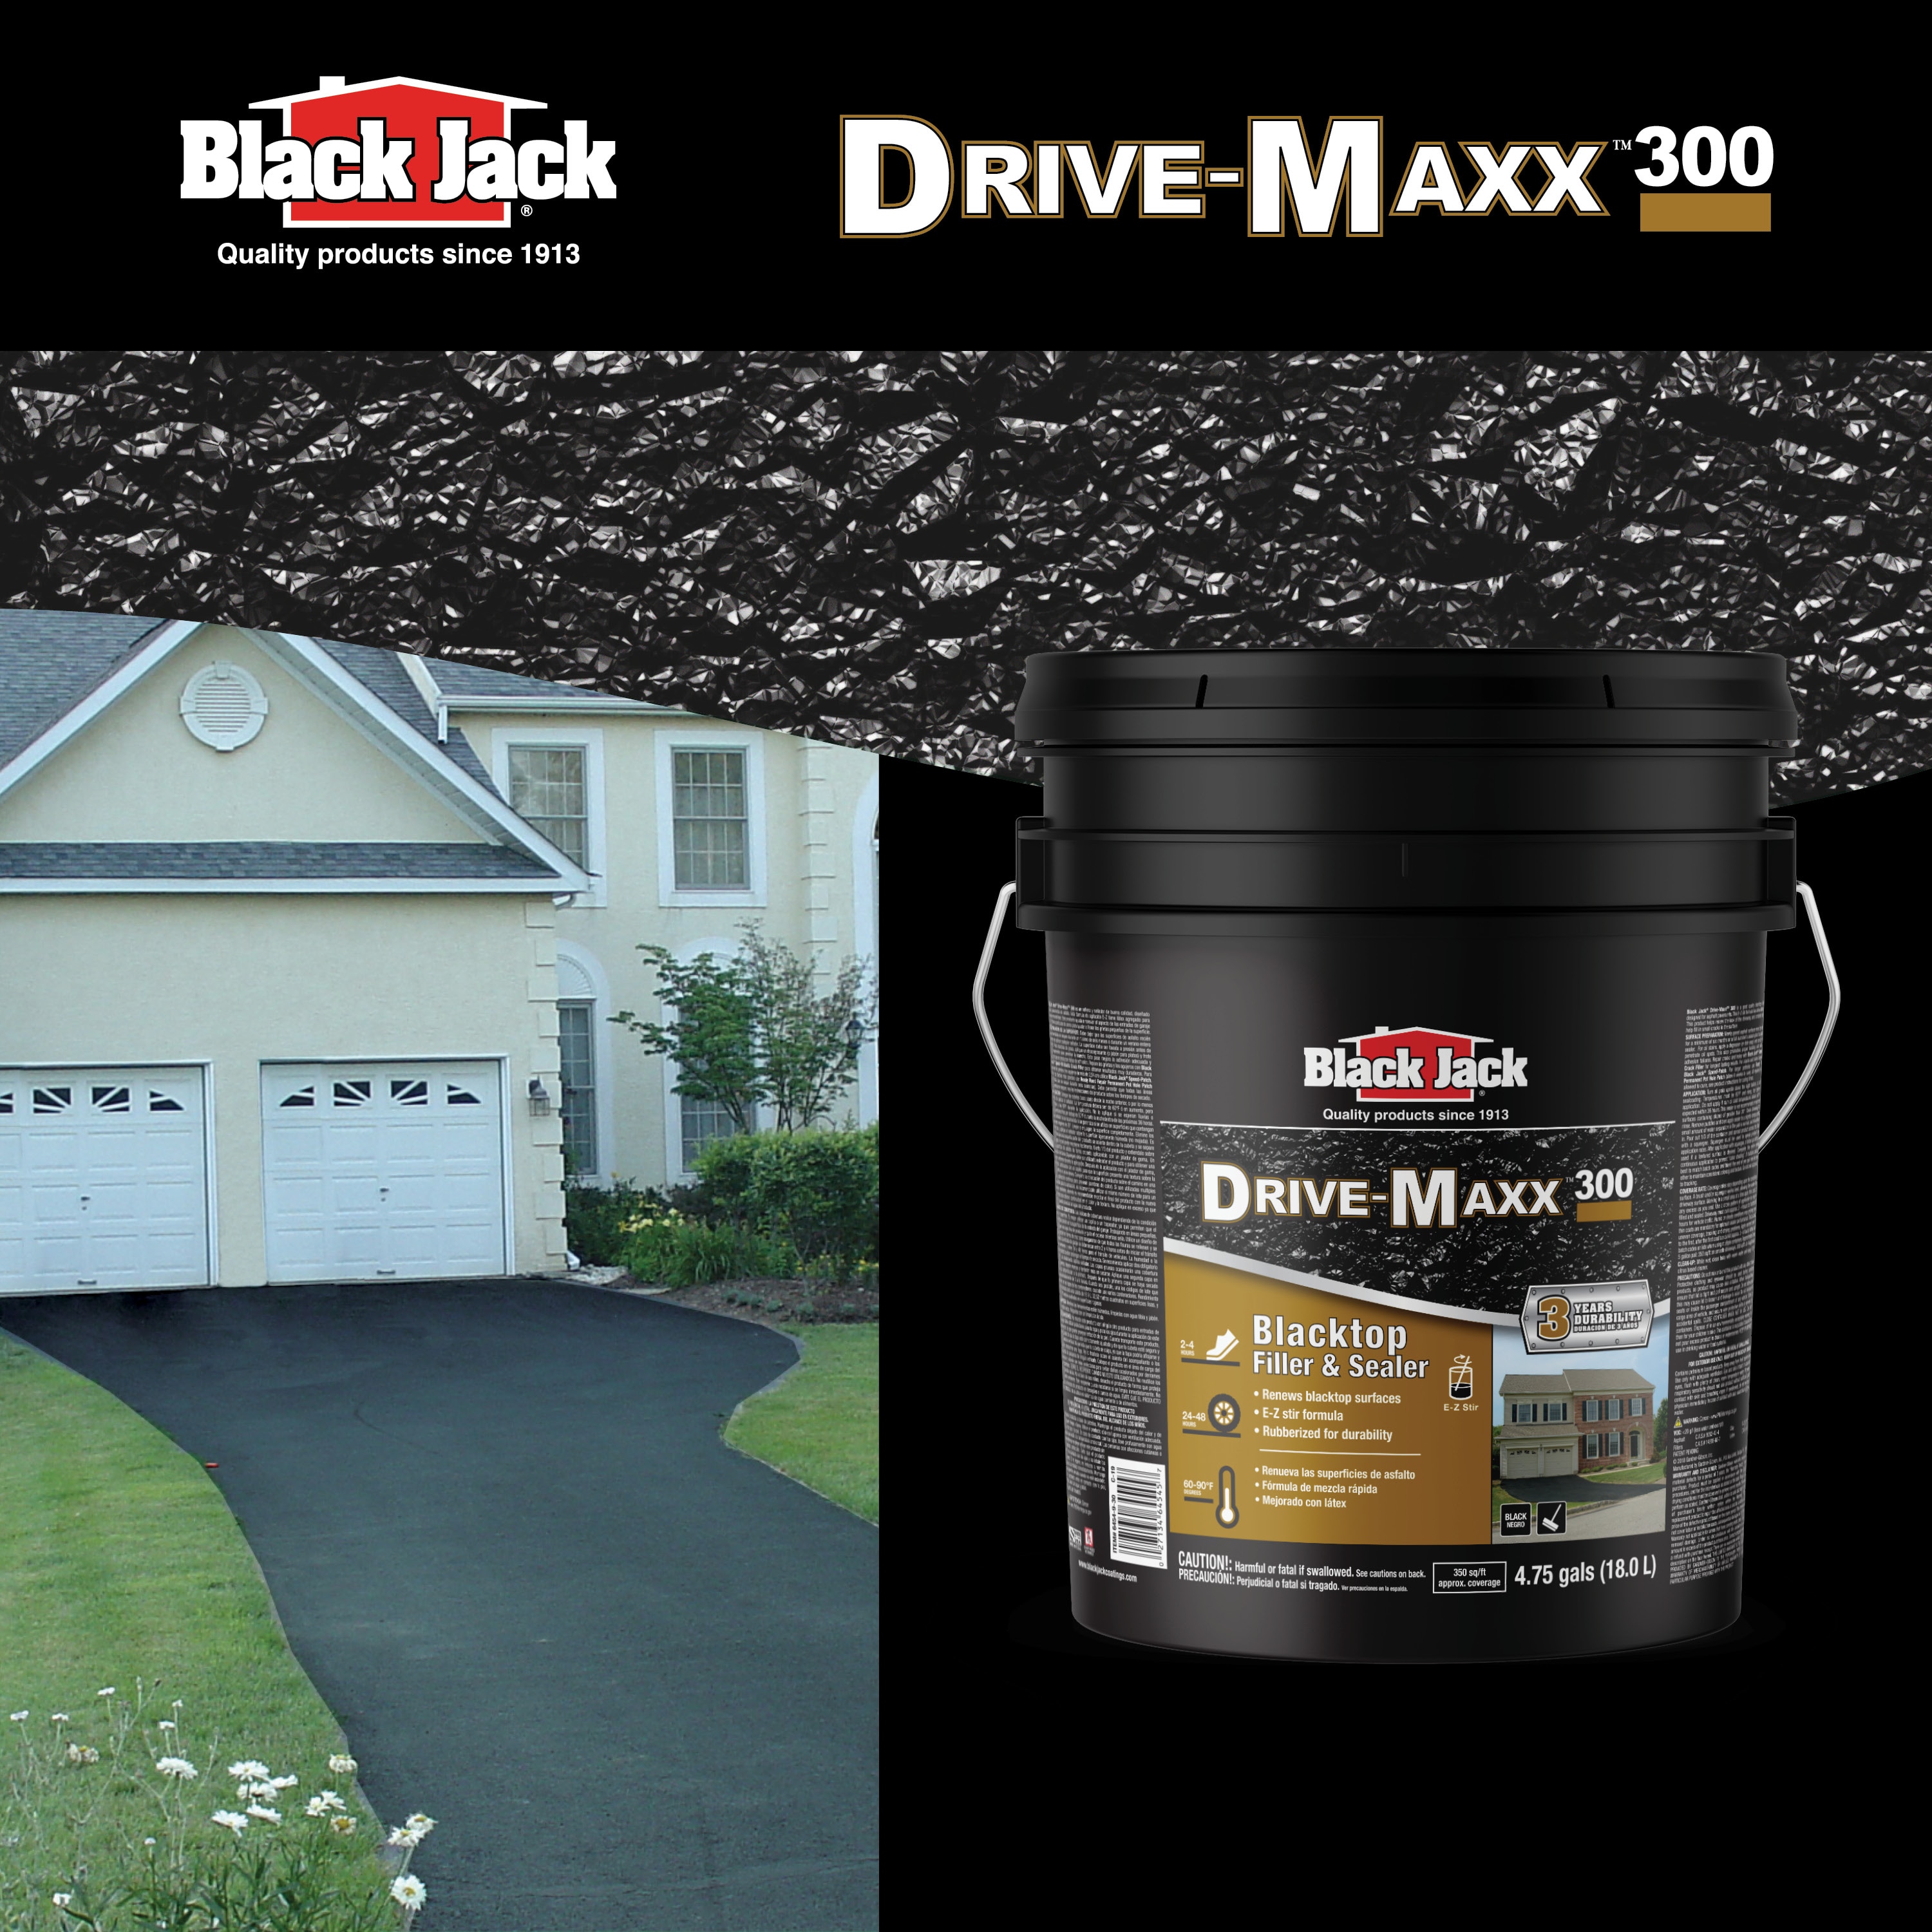 BLACK JACK Drive-Maxx 4.75-Gallon Asphalt Sealer in the Asphalt